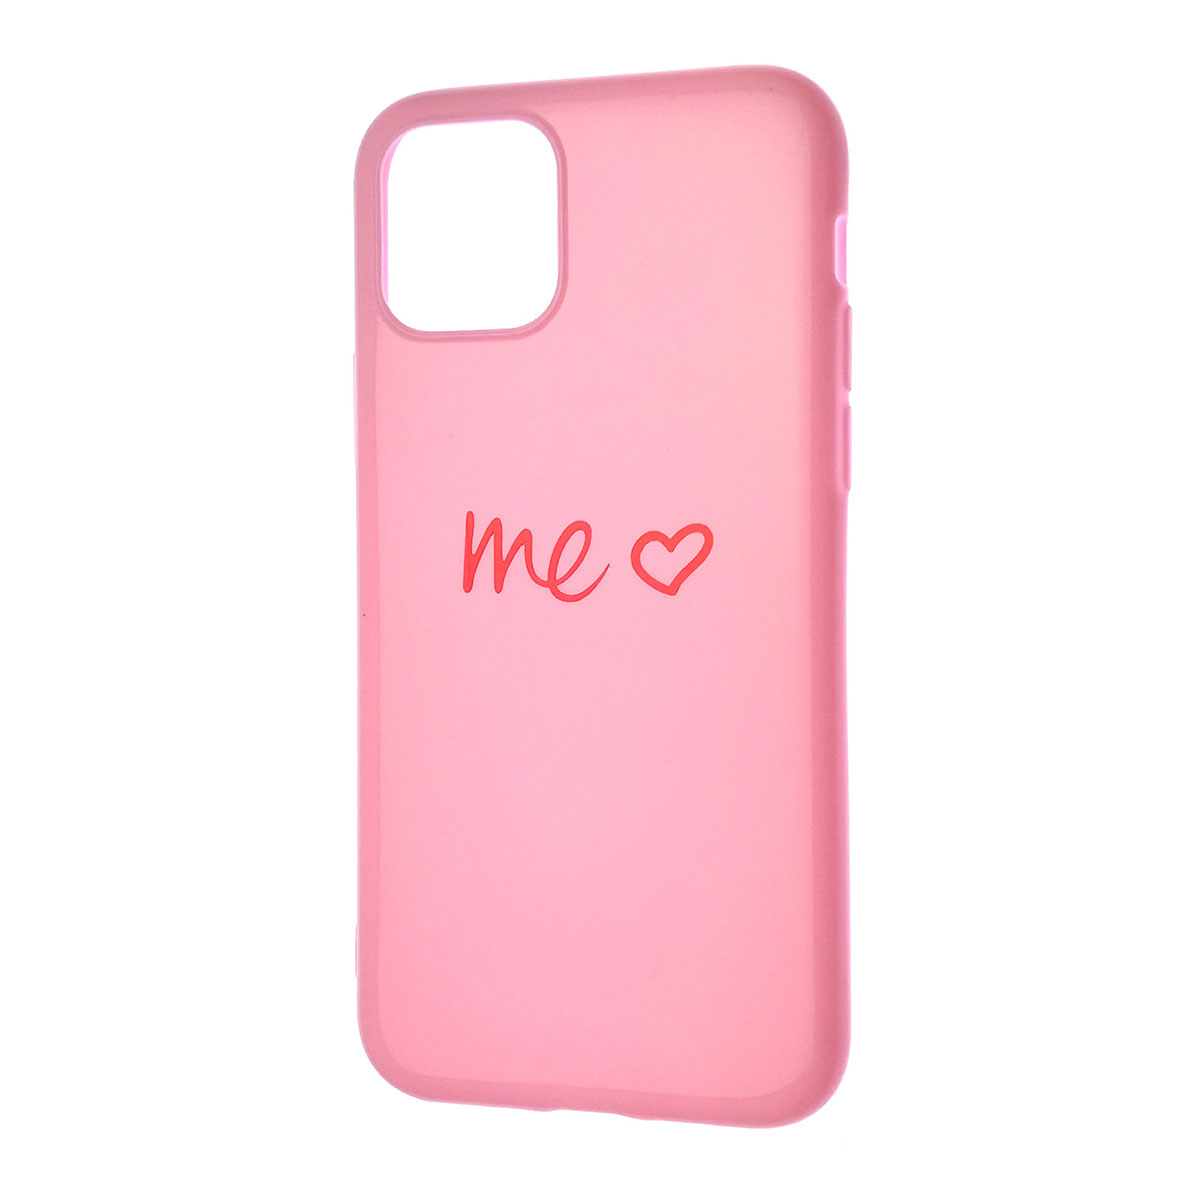 Чехол накладка для APPLE iPhone 11 Pro, силикон, глянцевый, рисунок Me love, цвет розовый.